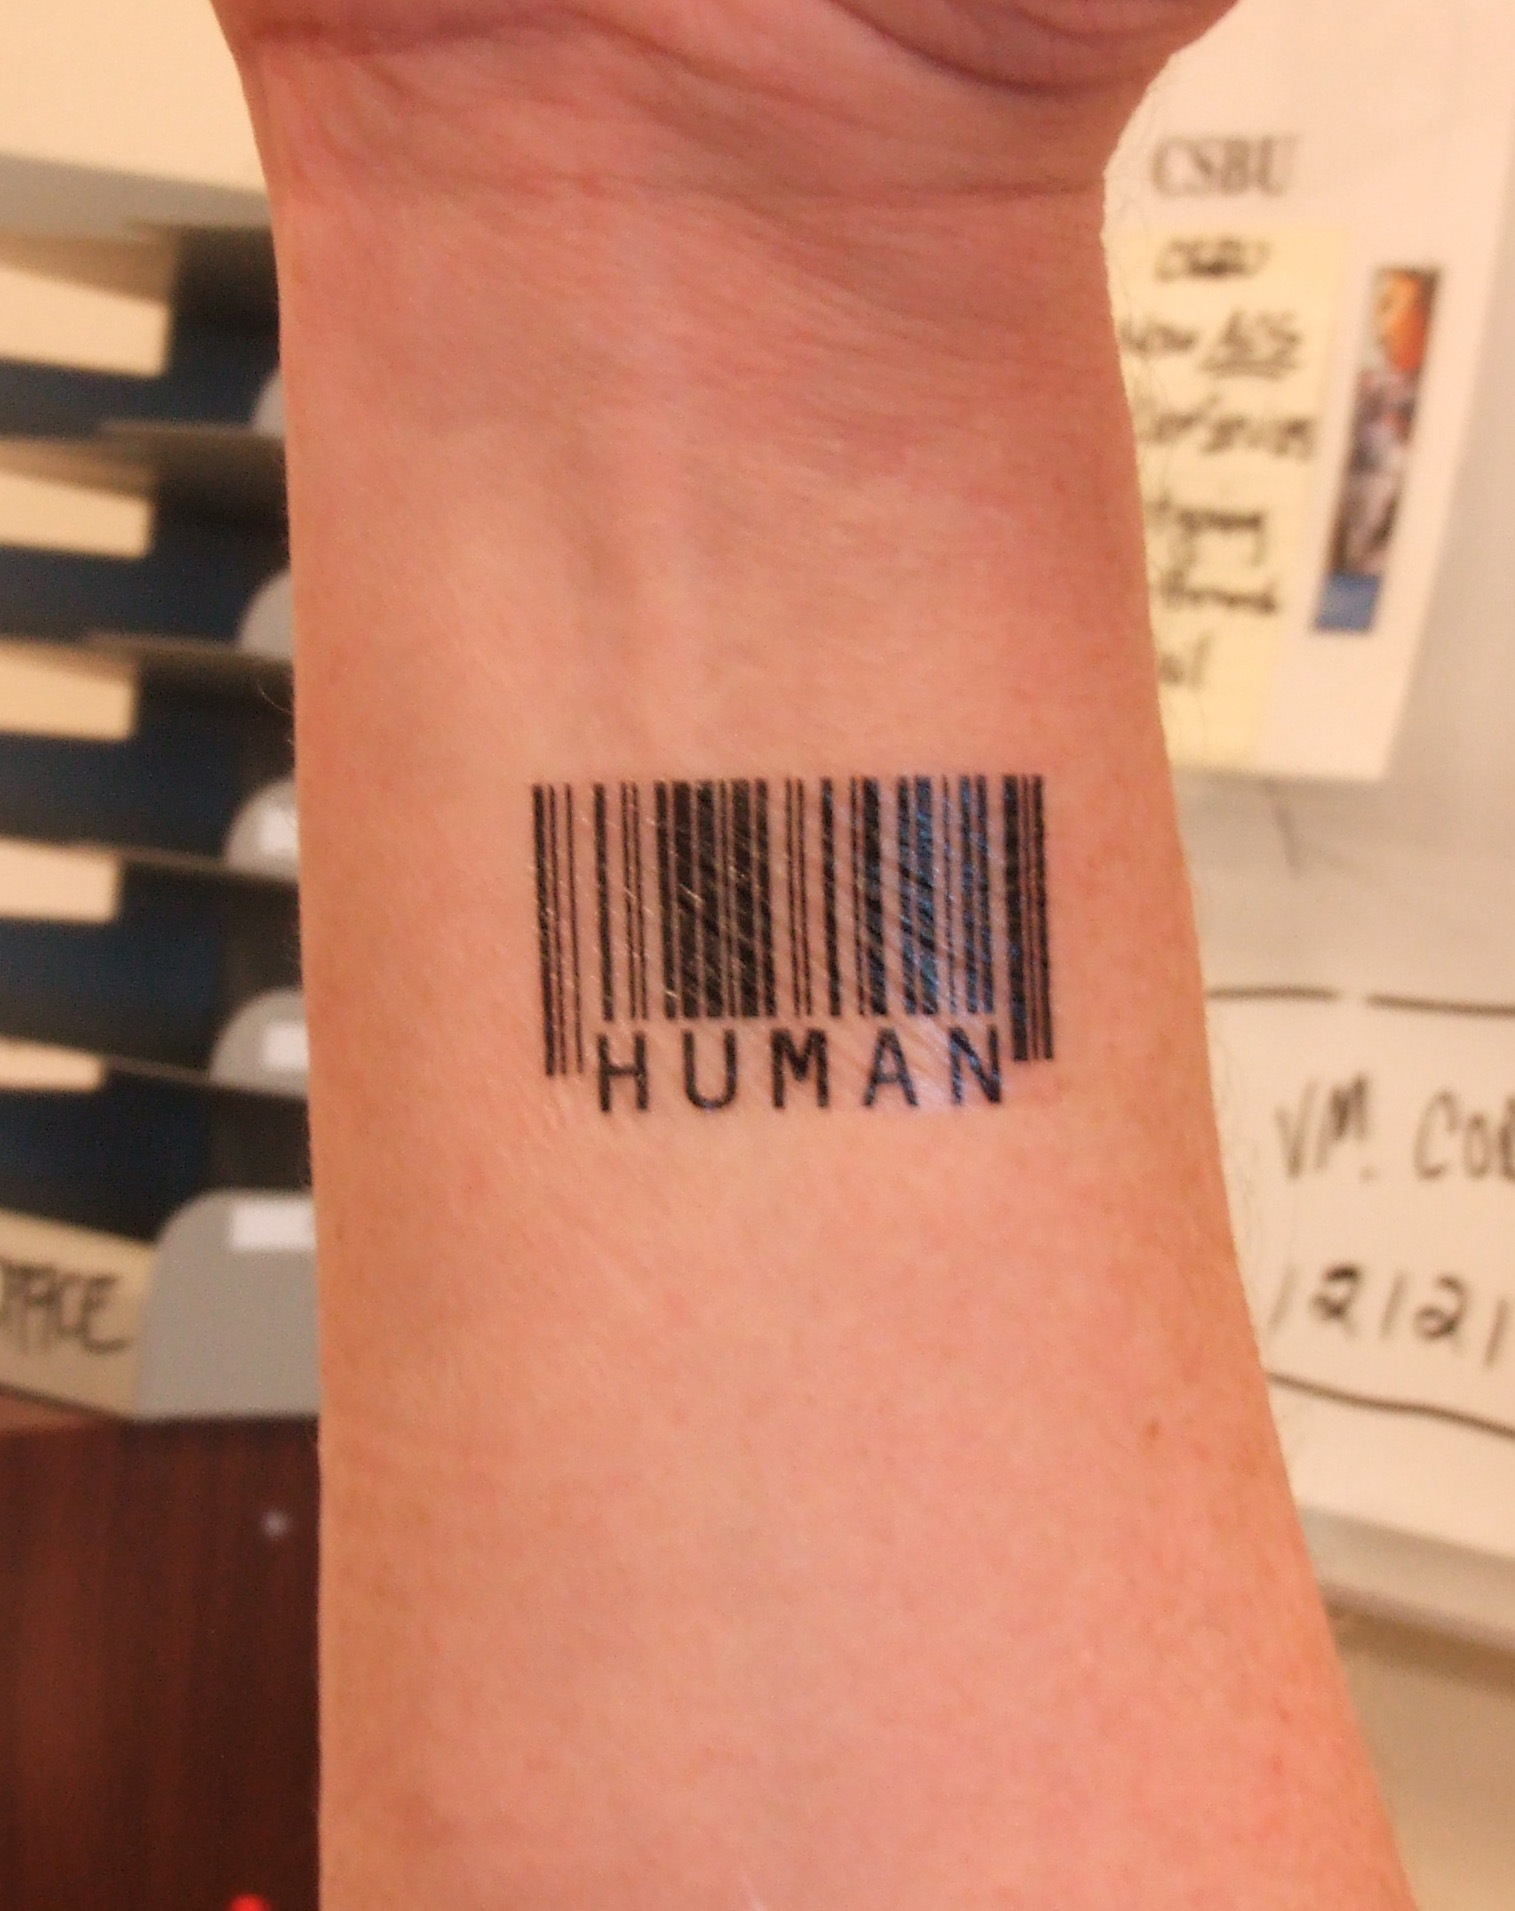 Black Barcode Tattoo On Wrist